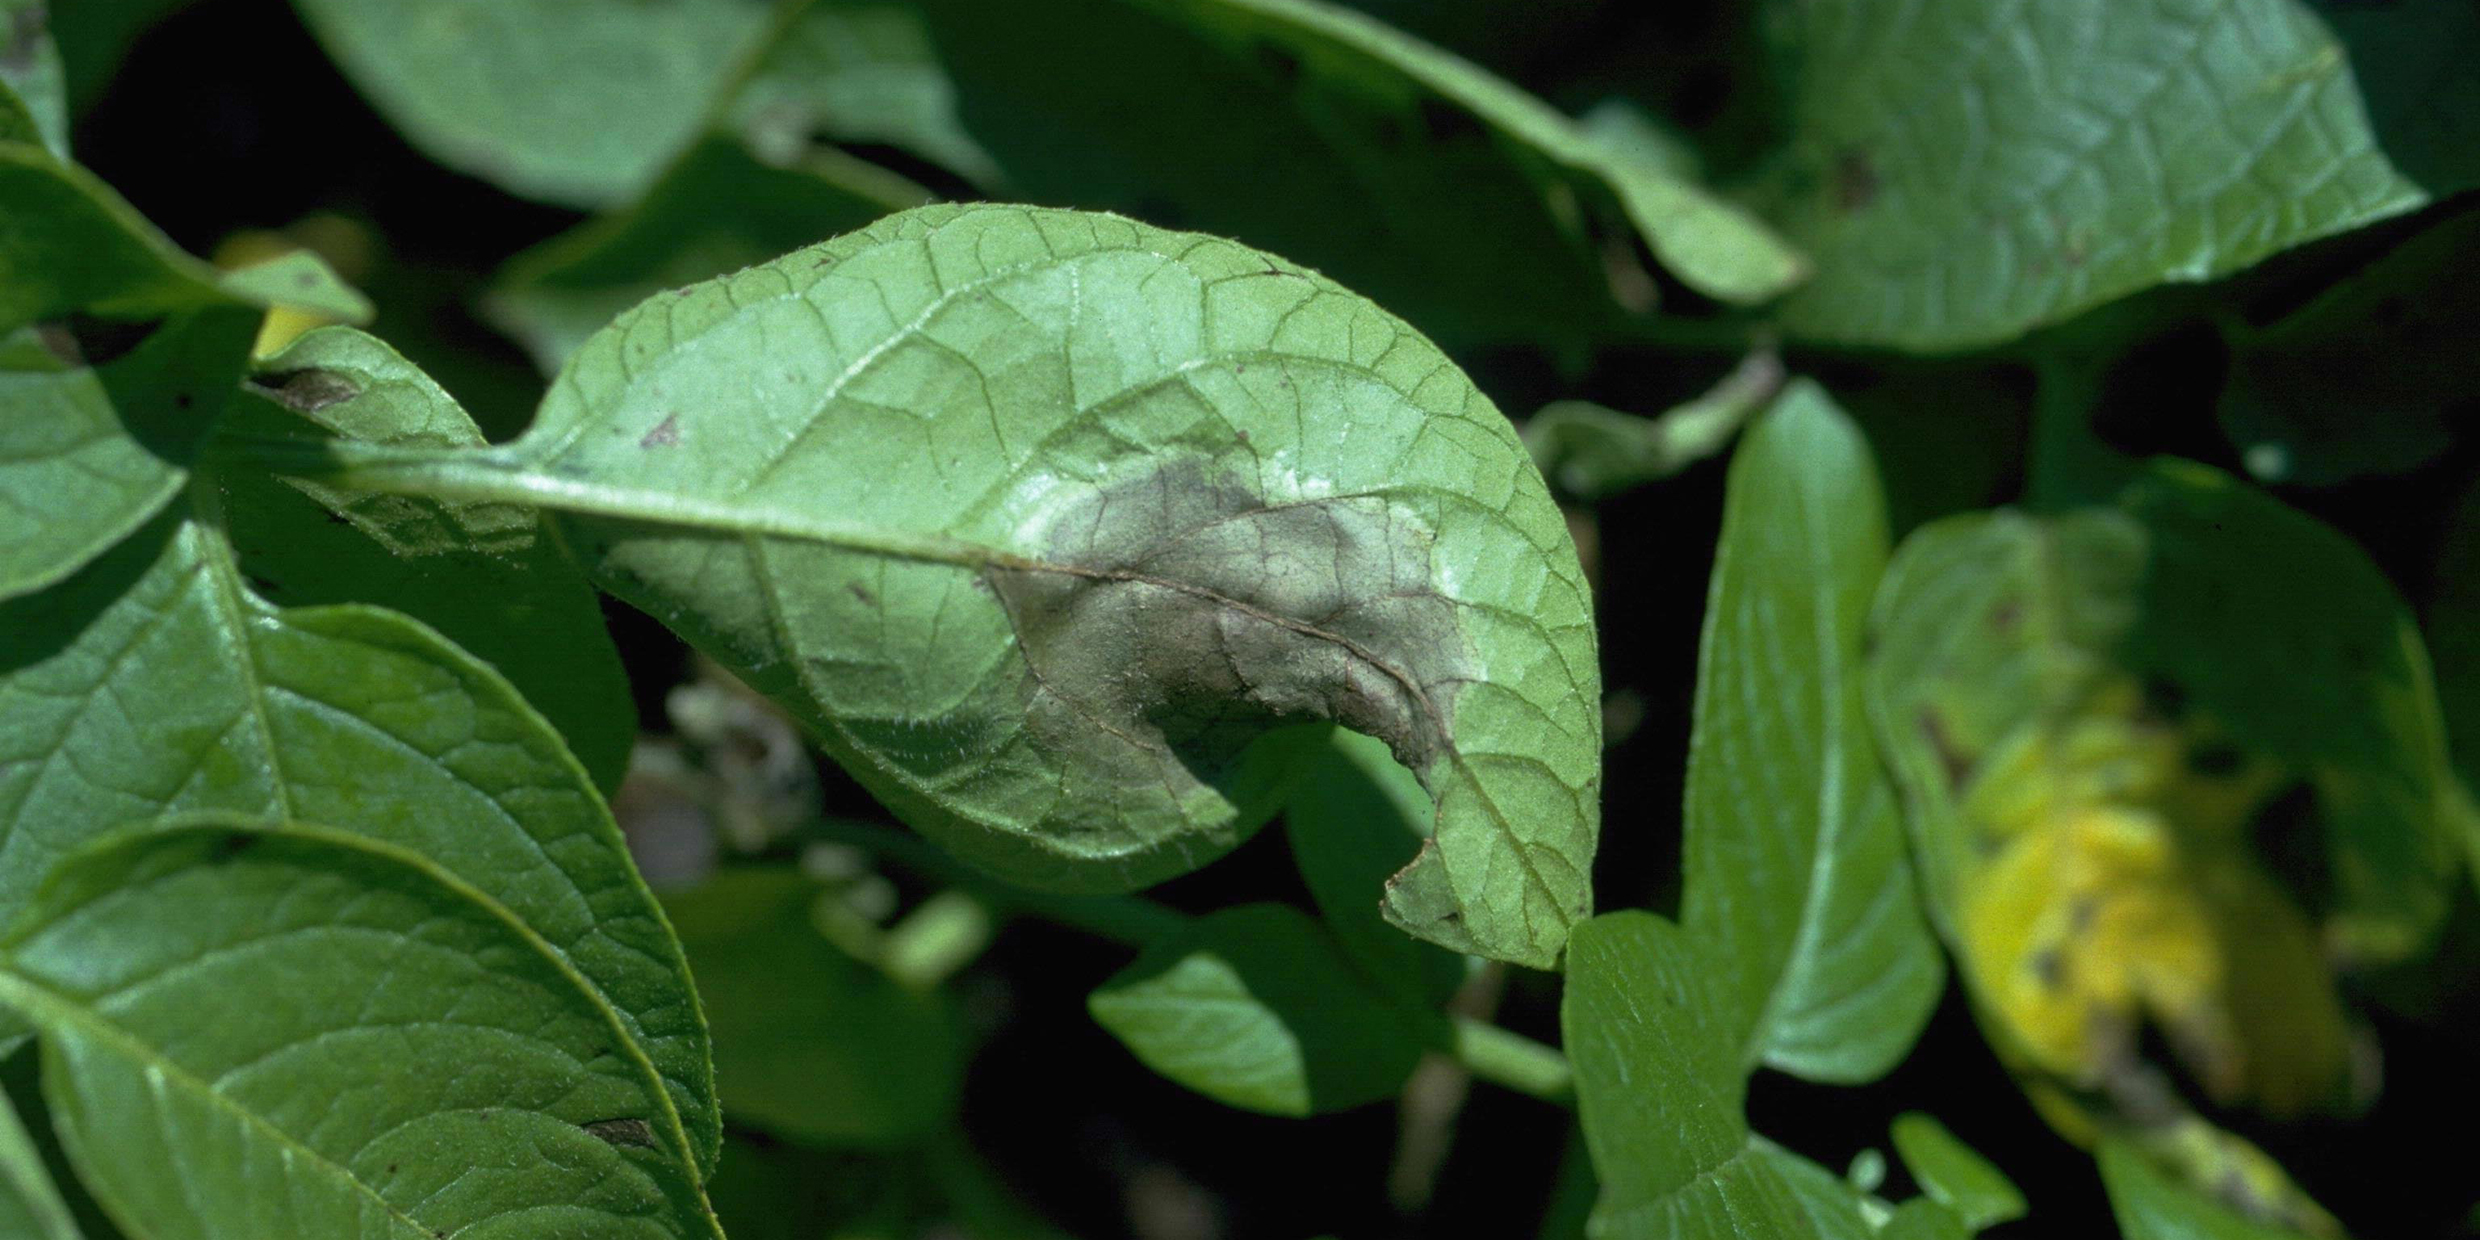 Image of blight on potato leaf